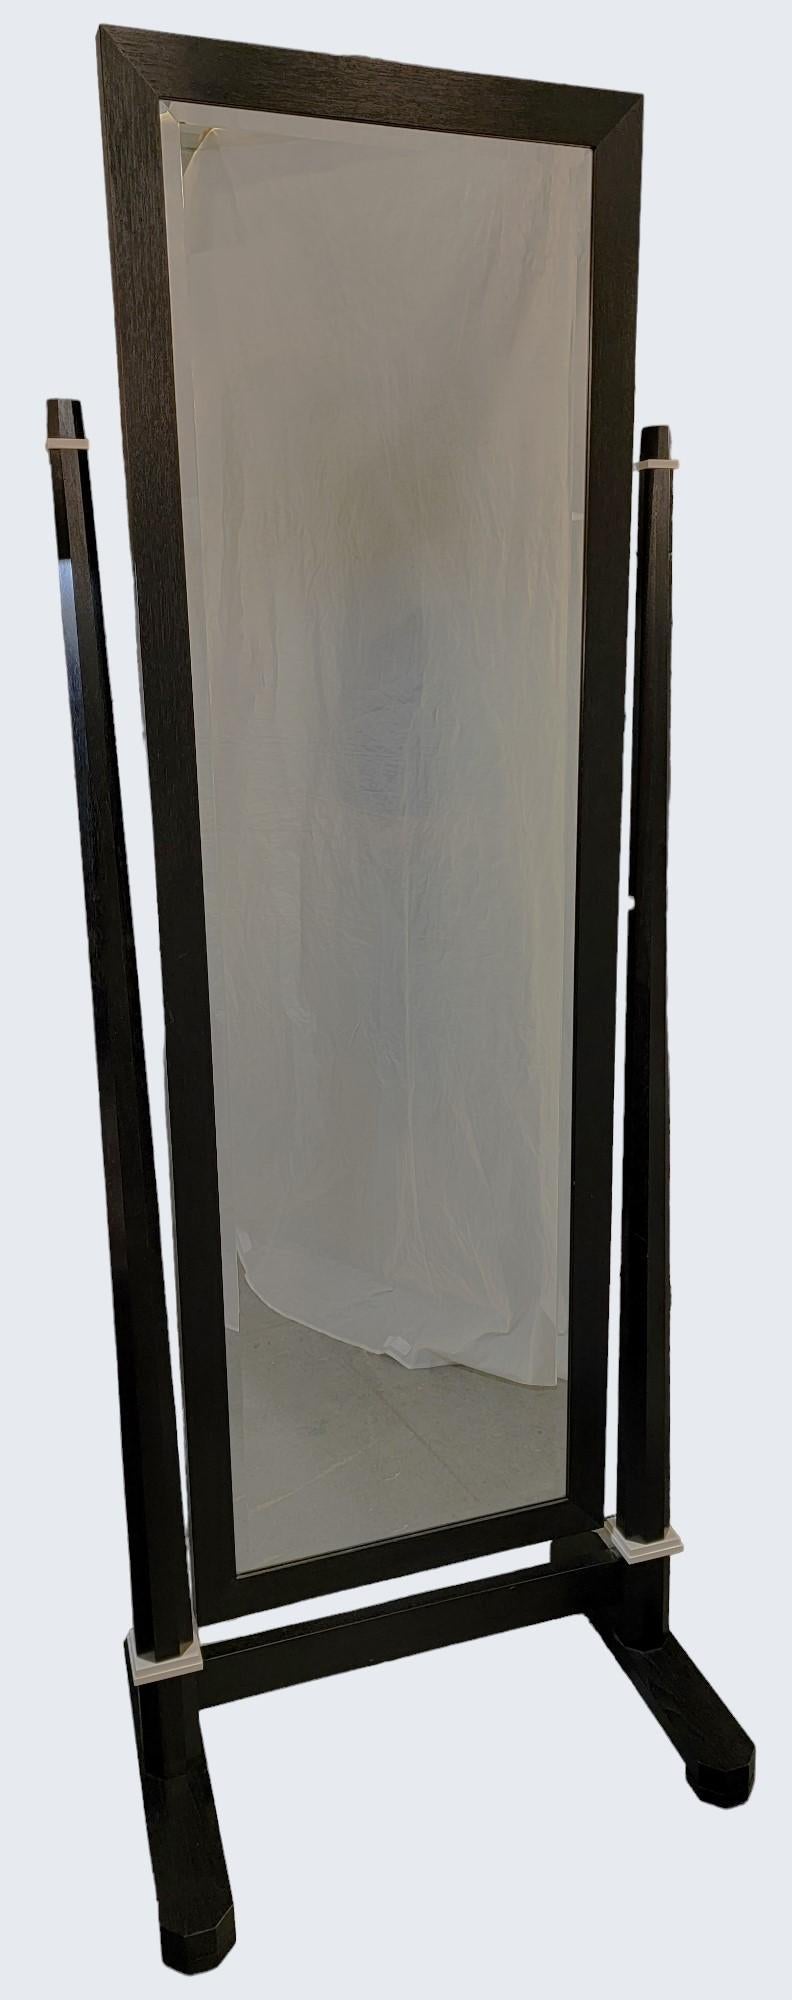 Italian Deco style beveled standing adjustable mirror 1980s measures approx - 81 height x 31 width x 21.5 deep.